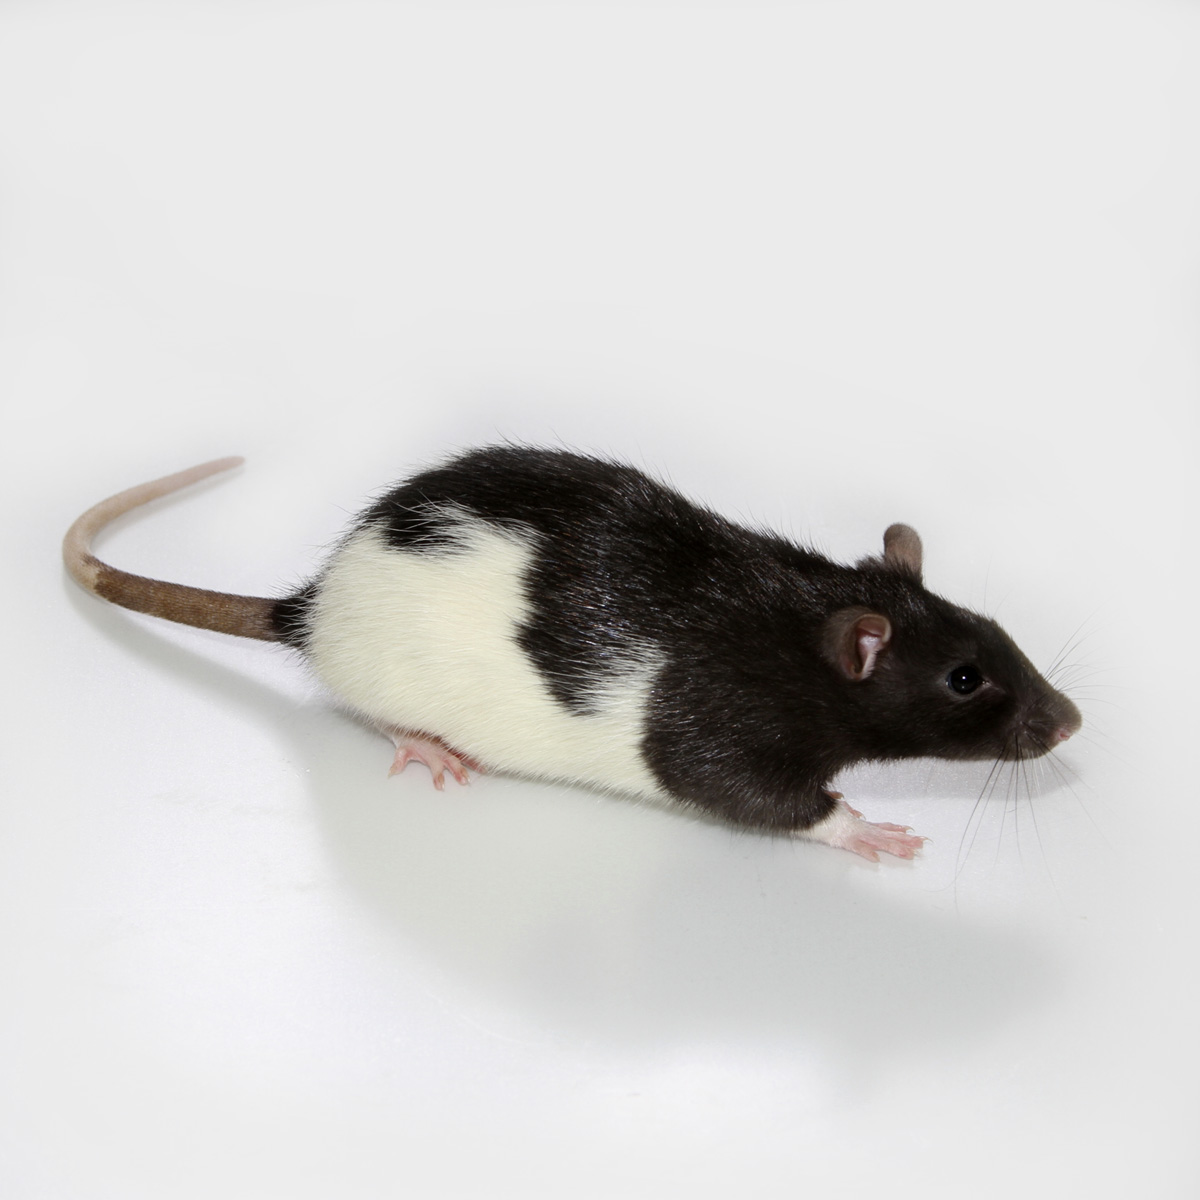 Long Evans Rat